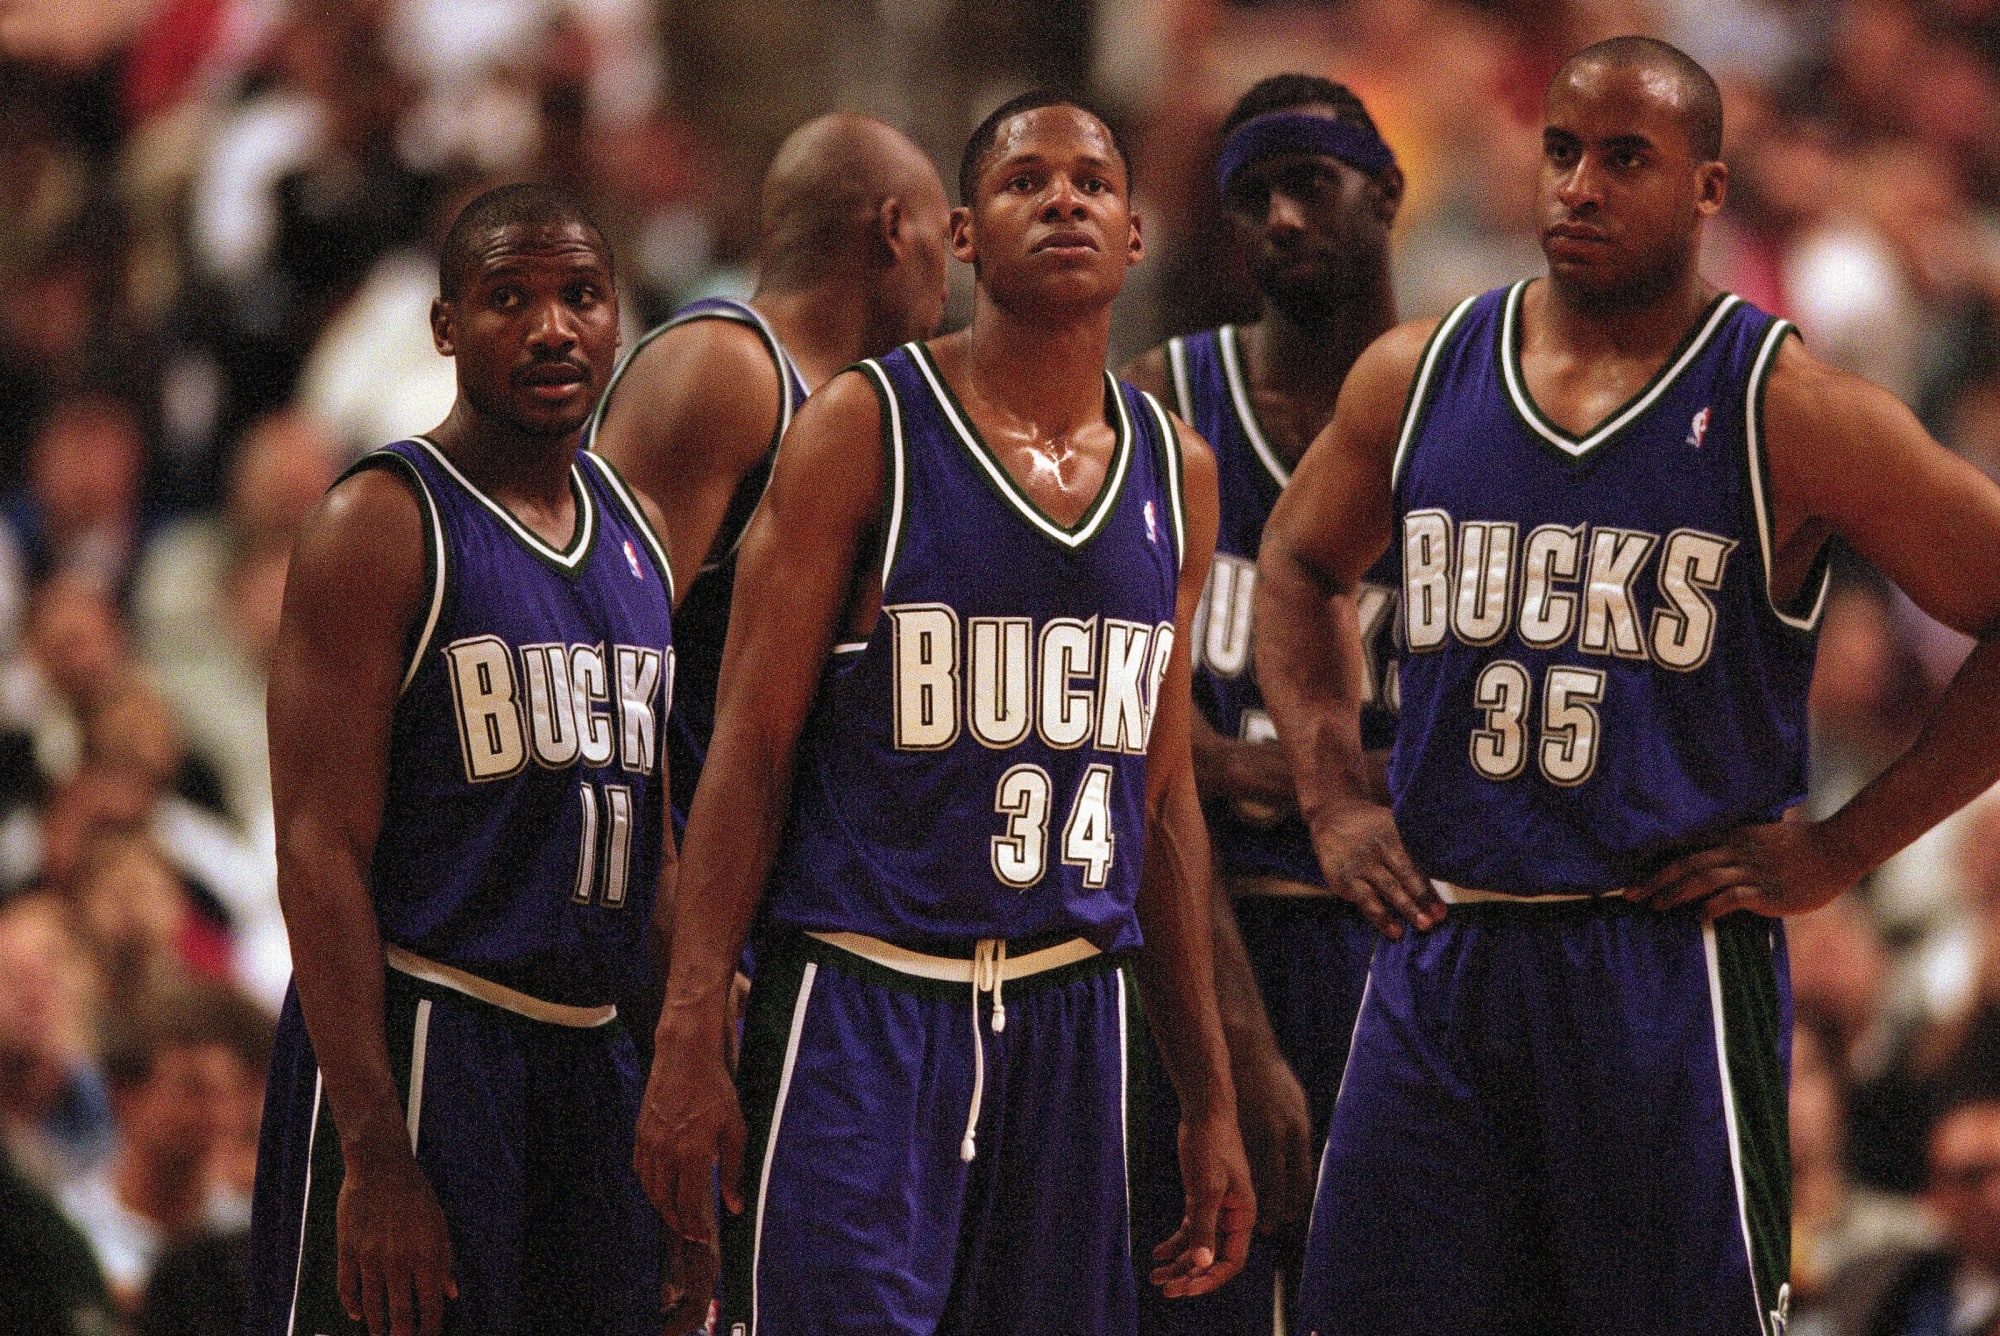 The huddles were the worst” — Ray Allen on chaotic Milwaukee Bucks